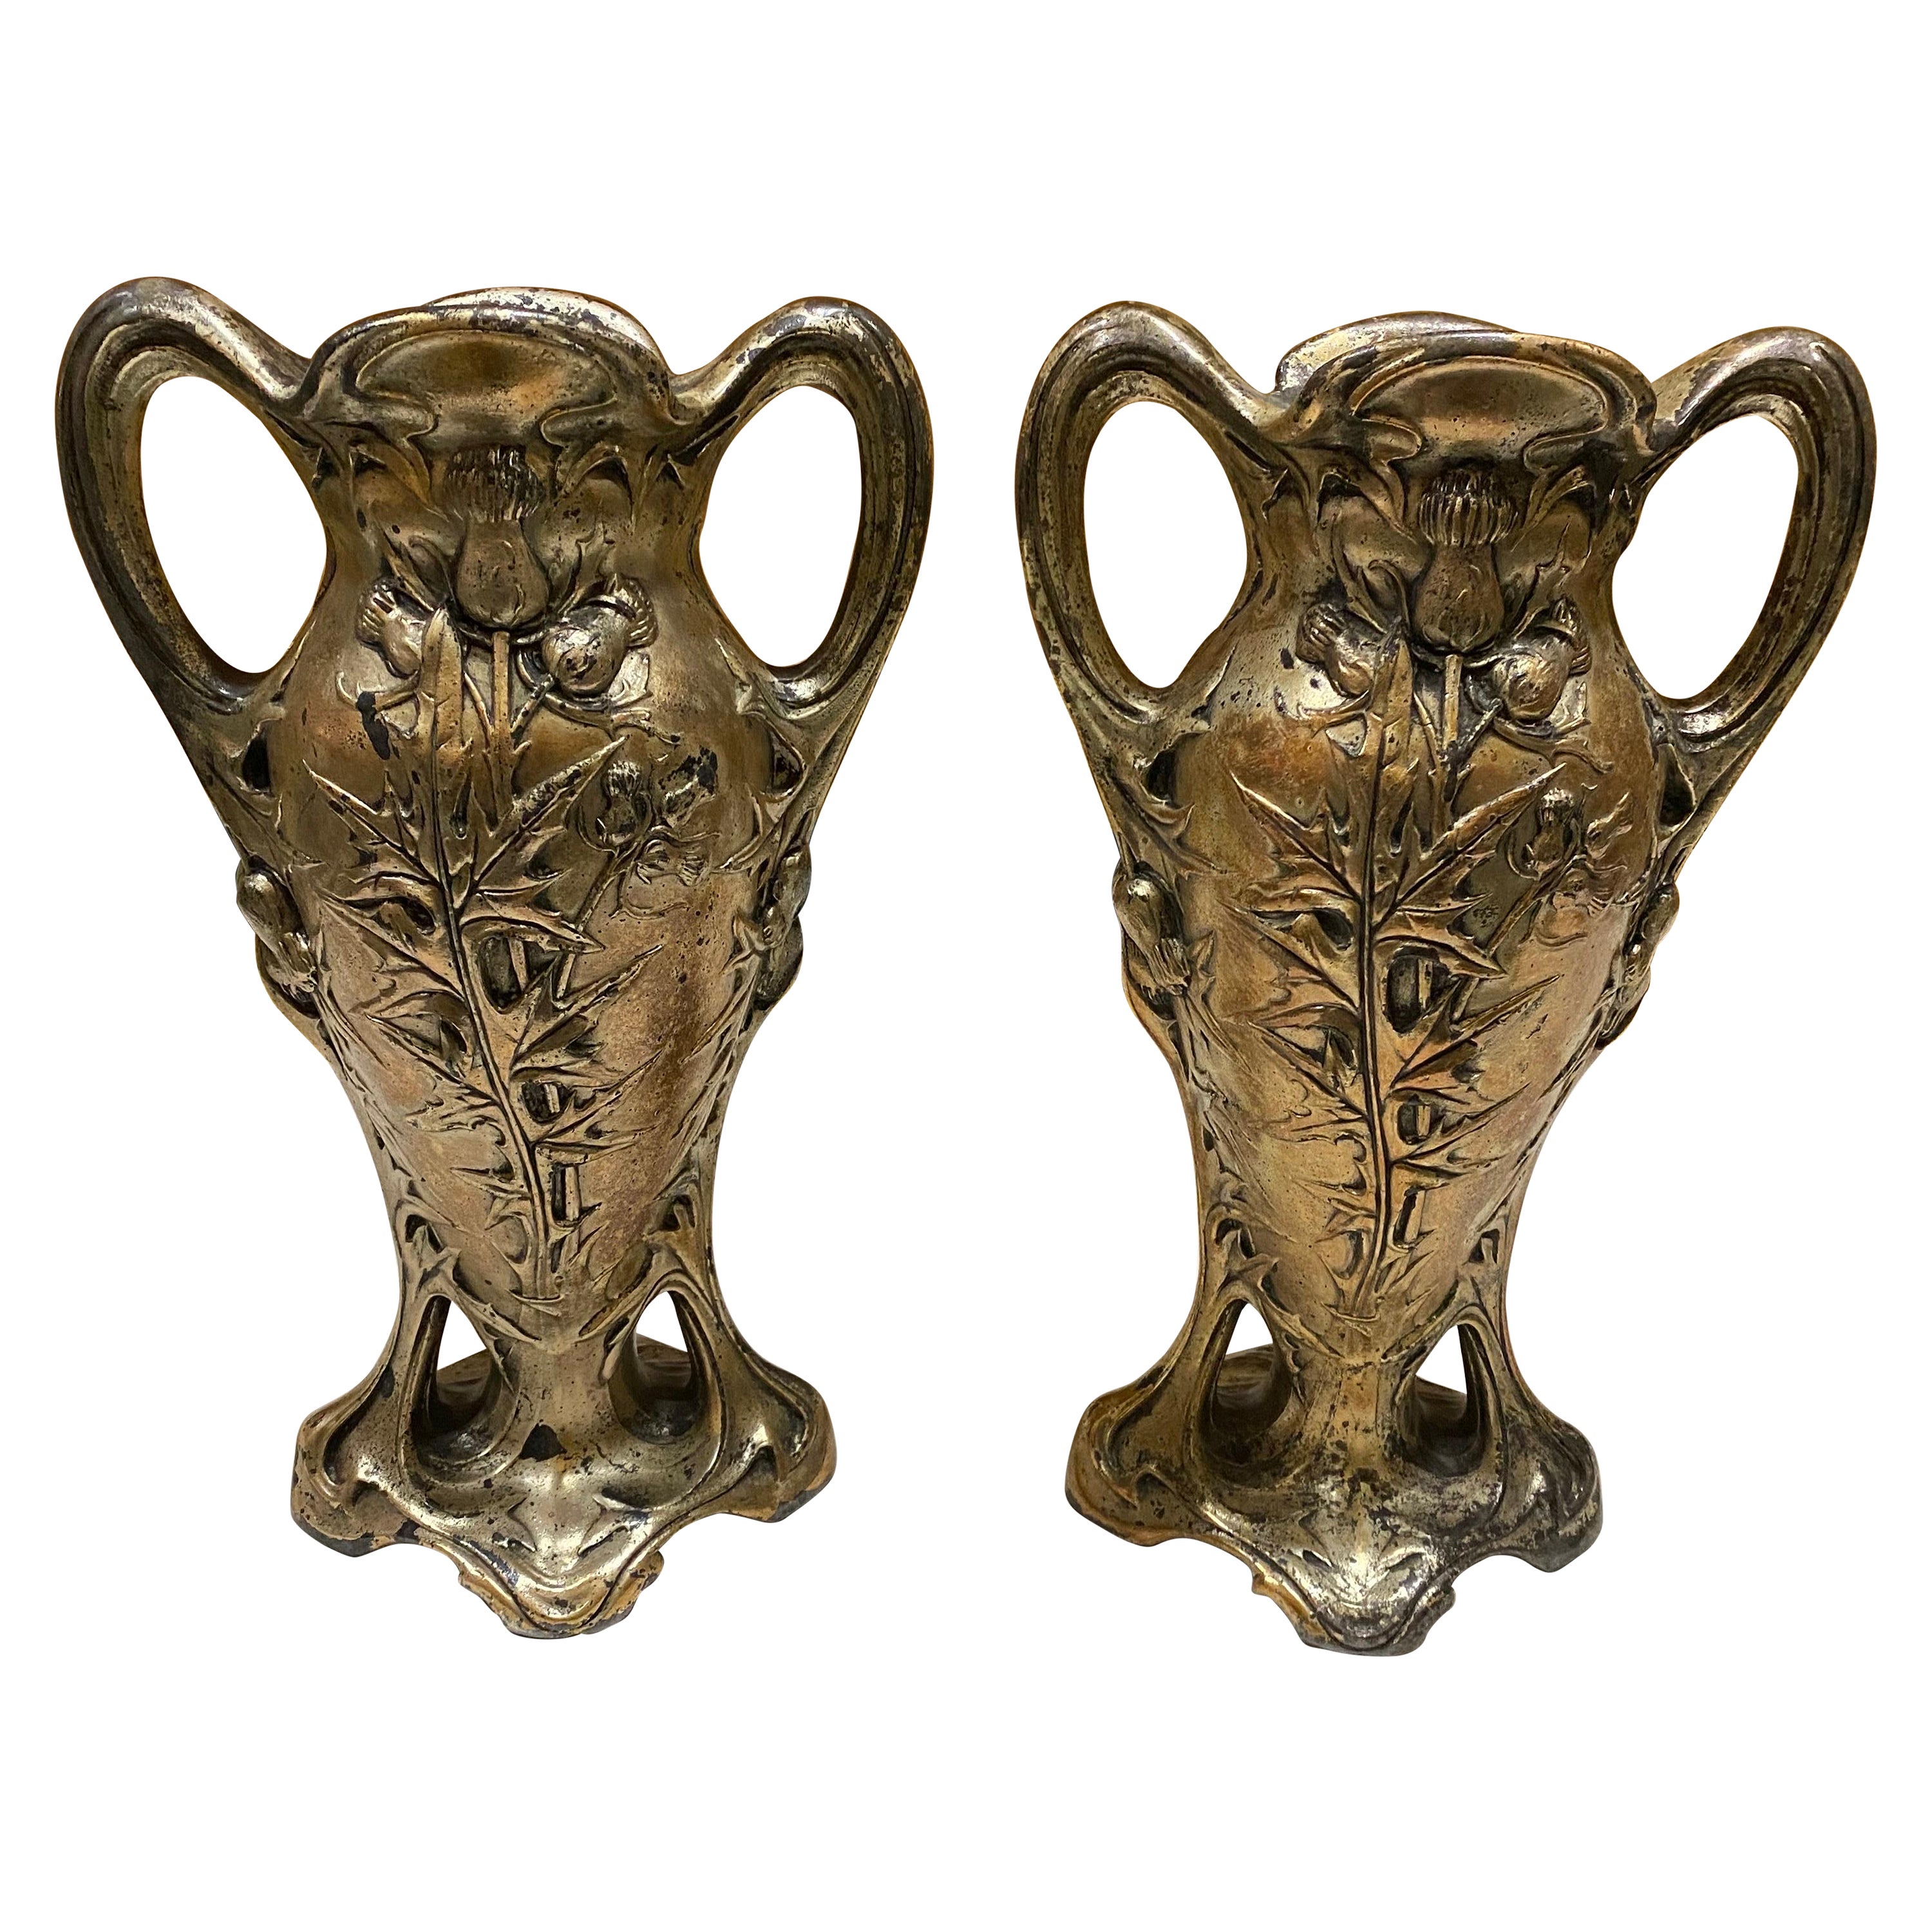 Pair of Art Nouveau Vases Iron Forged, by Dagobert Peche